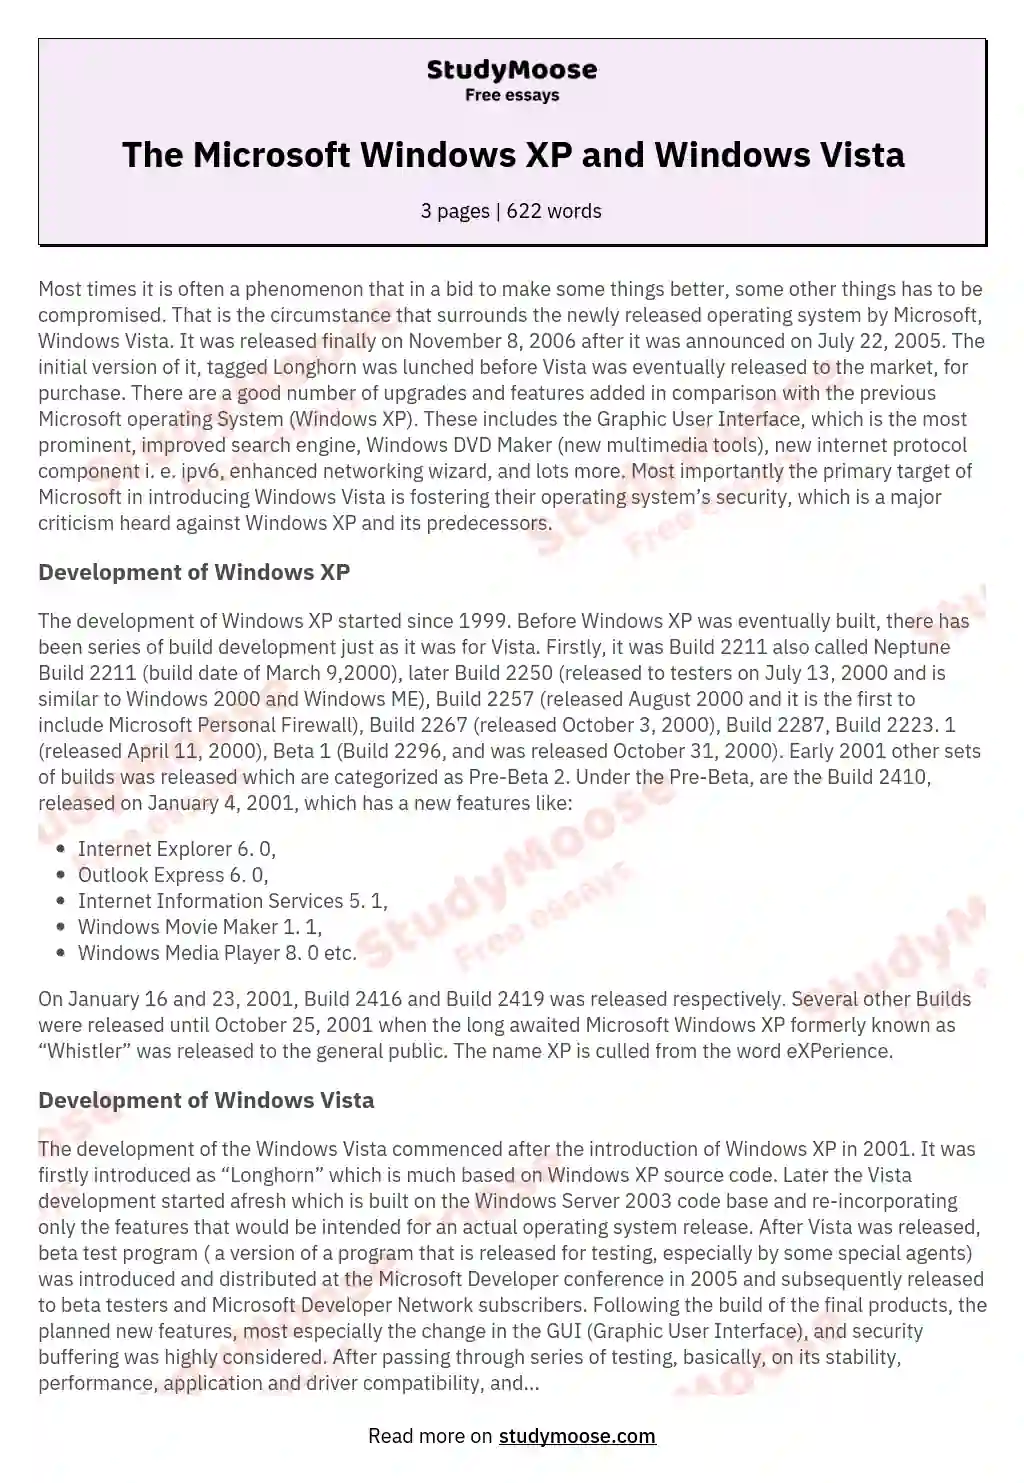 The Microsoft Windows XP and Windows Vista essay